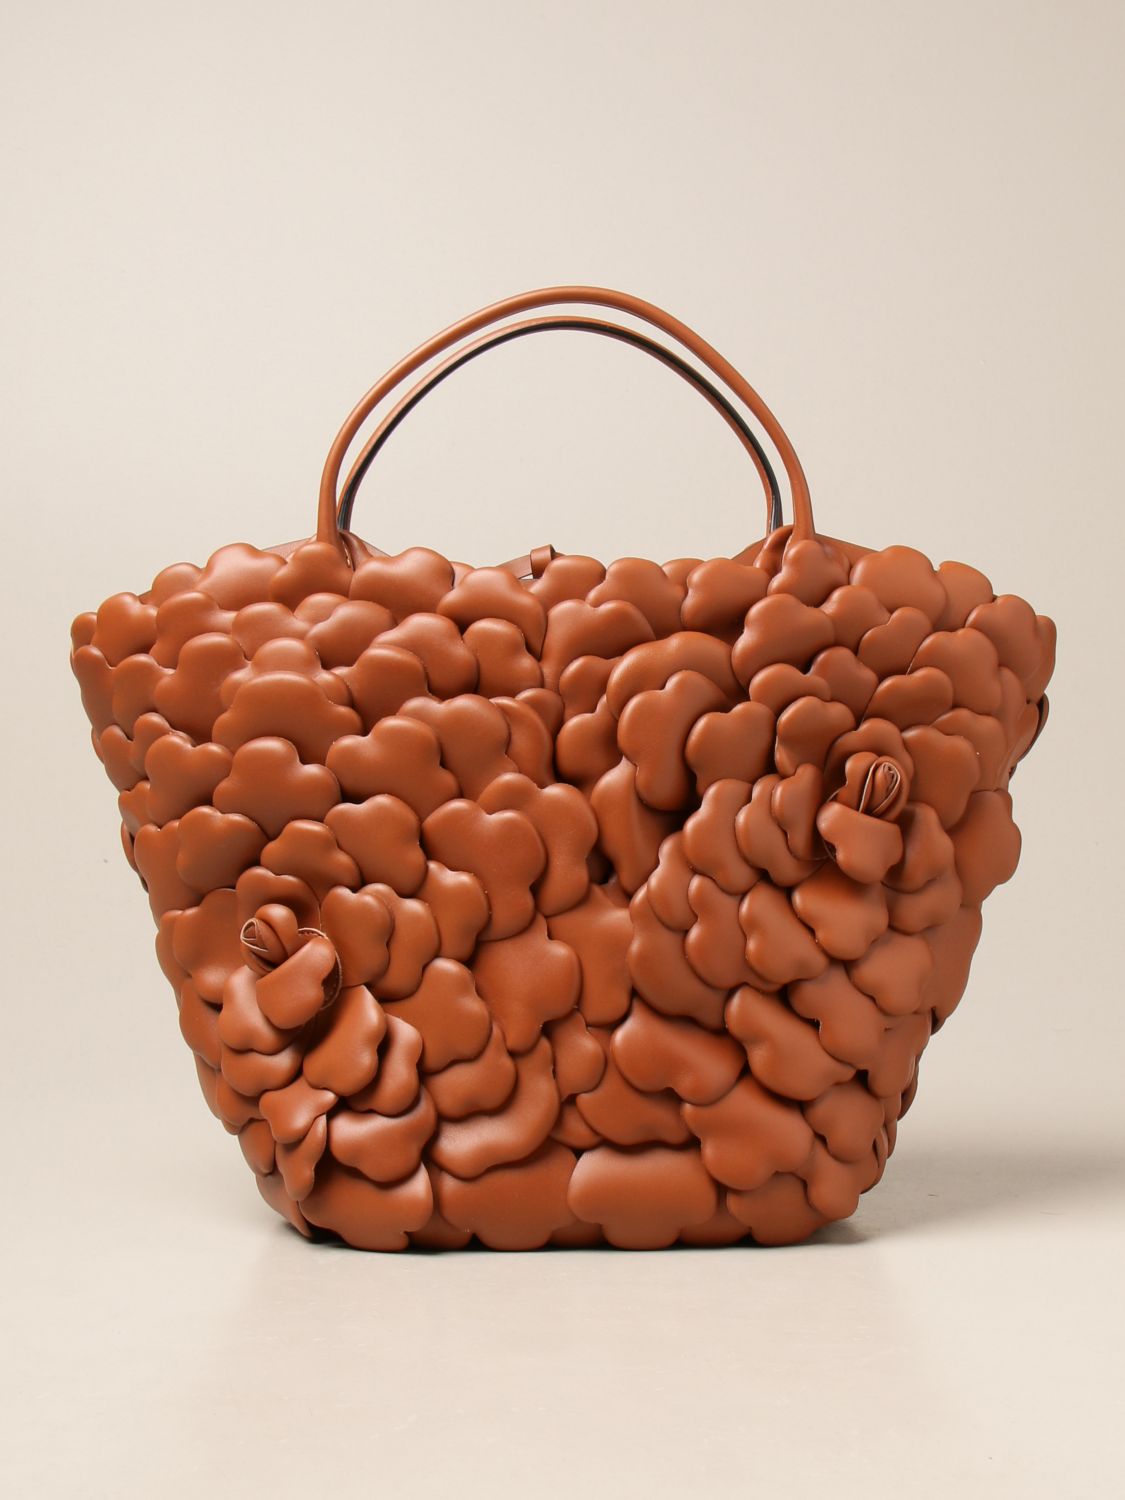 Valentino Garavani Atelier Bag 03 Rose Edition leather bag